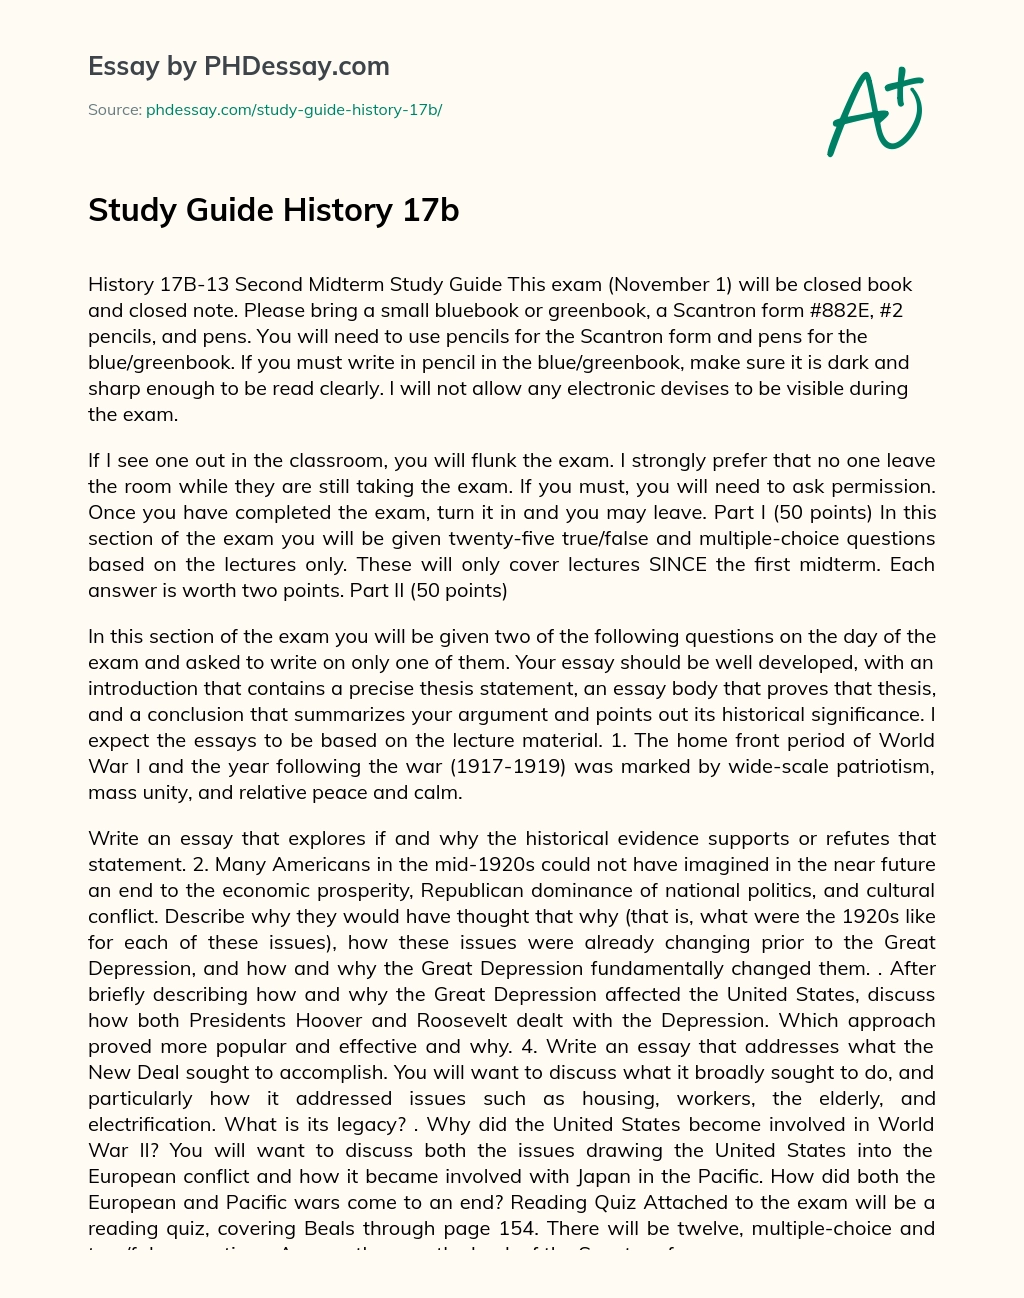 Study Guide History 17b essay